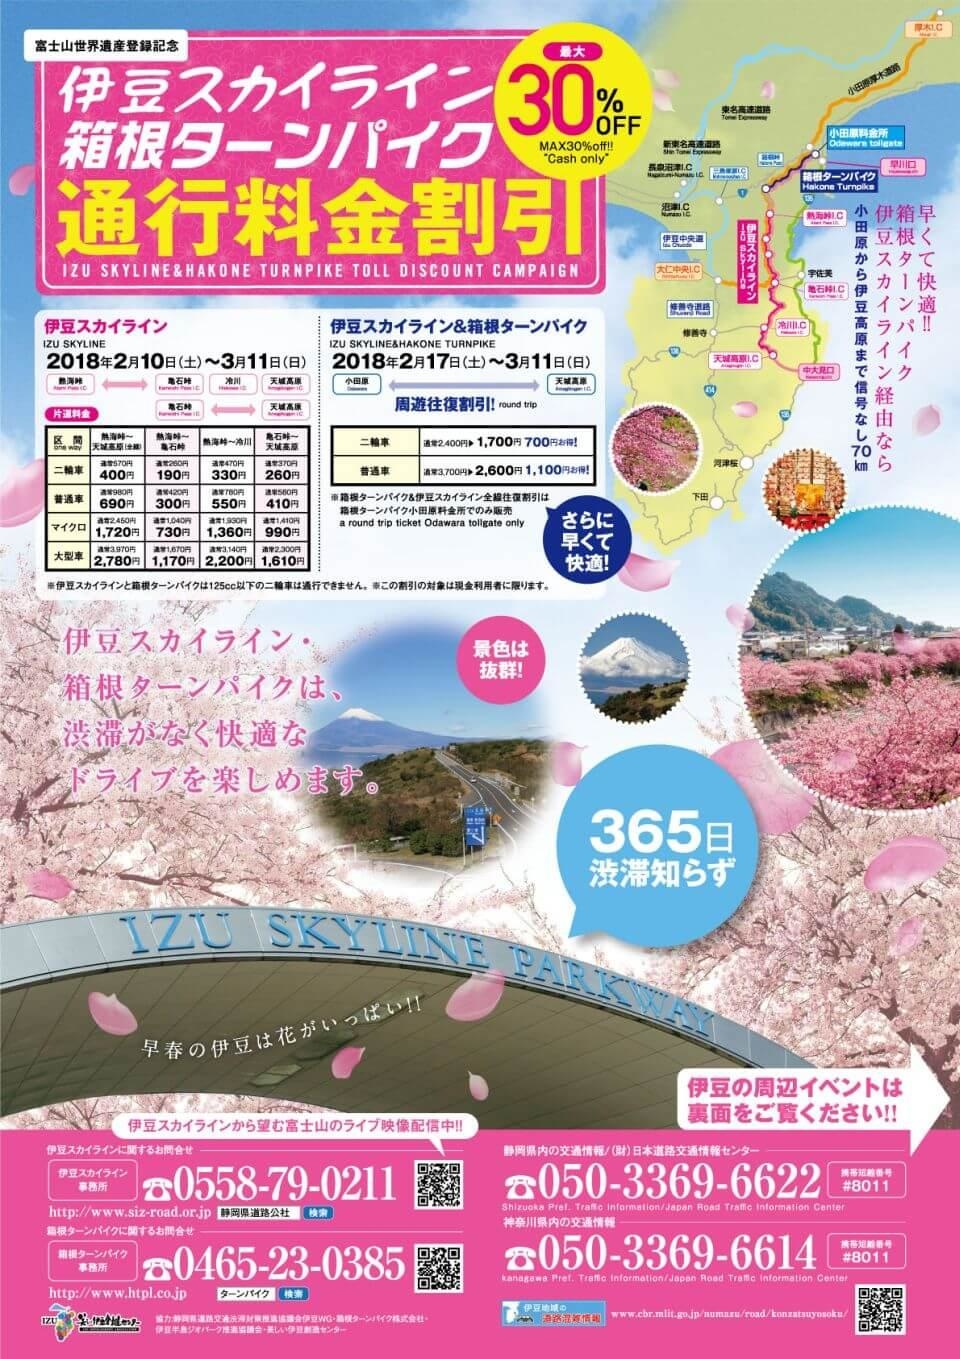 2018 Izu Skyline Discount Campaign